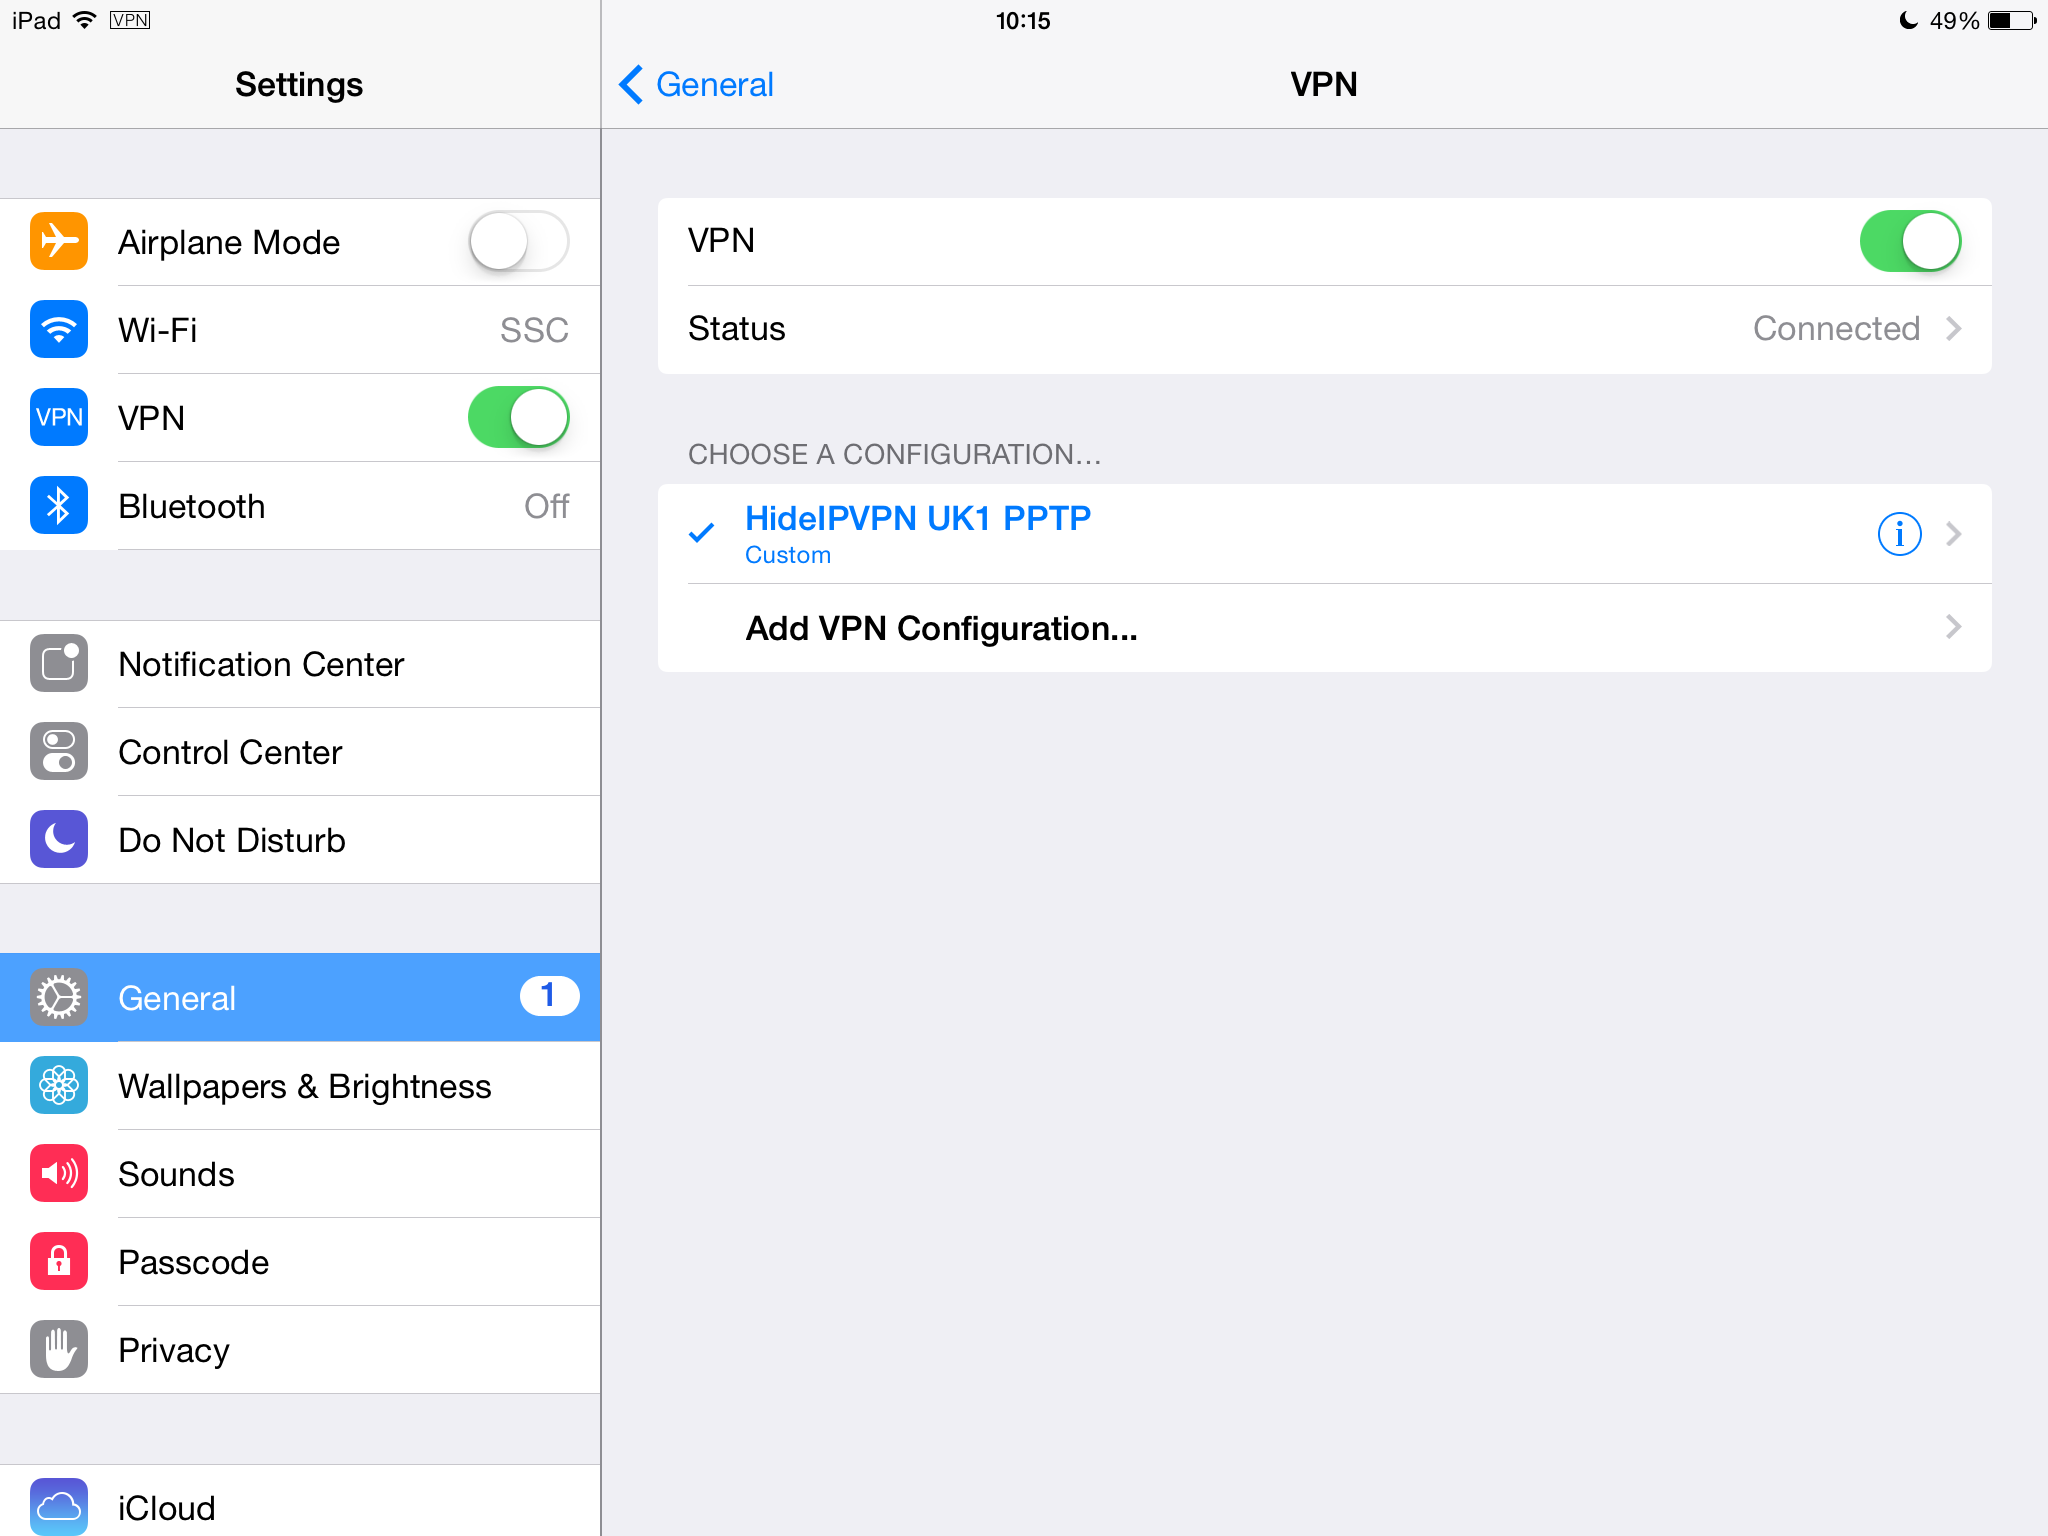 iPad PPTP VPN Setup Tutorial - HideIPVPN